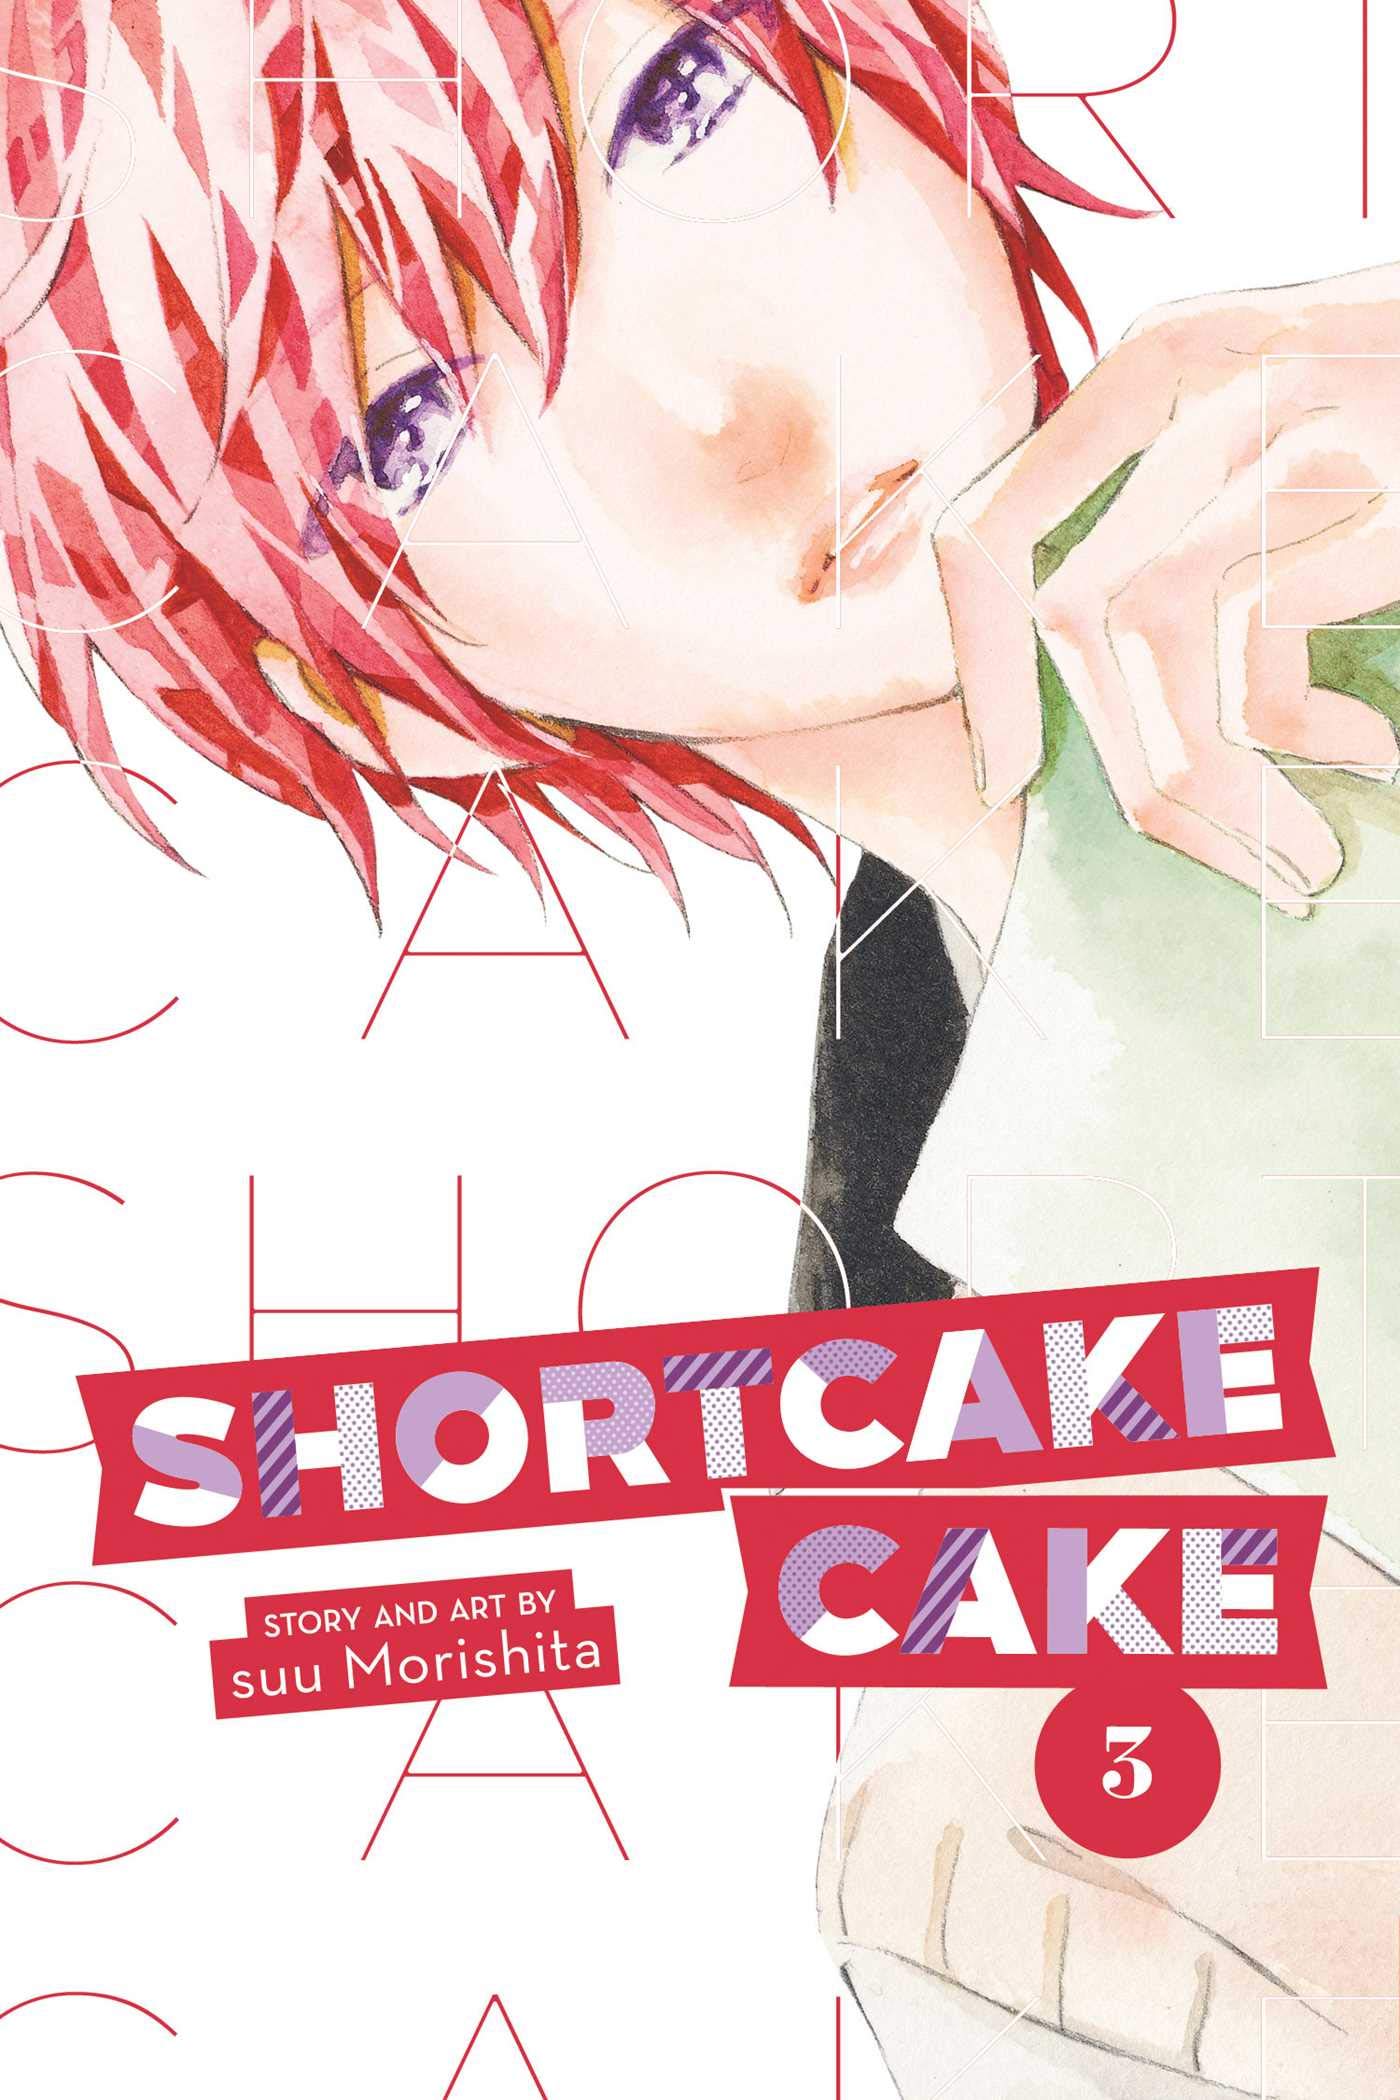 Shortcake Cake - Volume 3 | suu Morishita